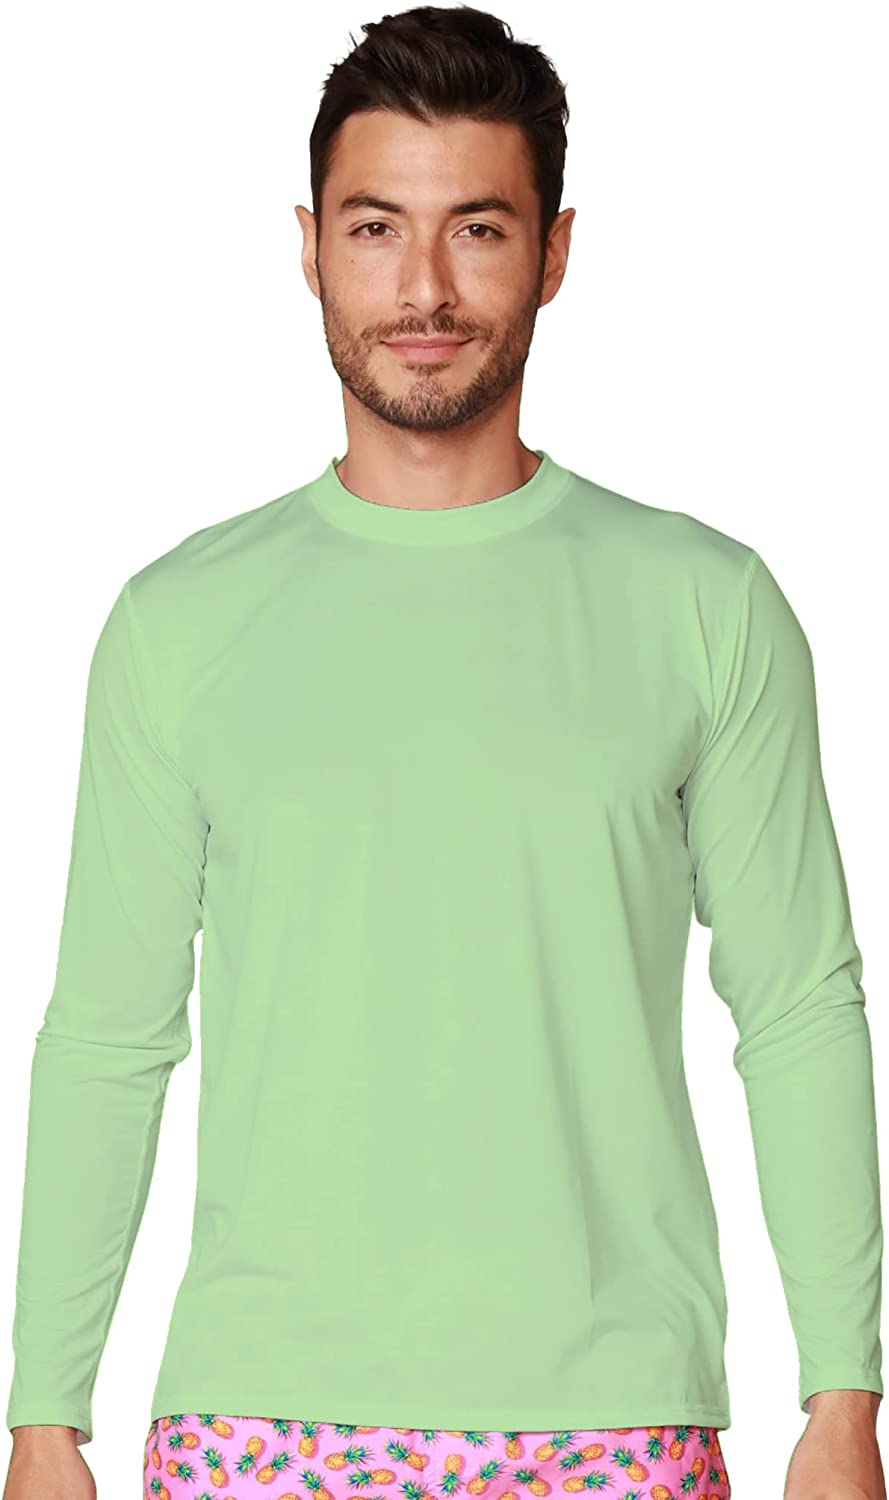 INGEAR Men's UPF50+ Long Sleeve UV Sun Protection Shirts Quick Dry